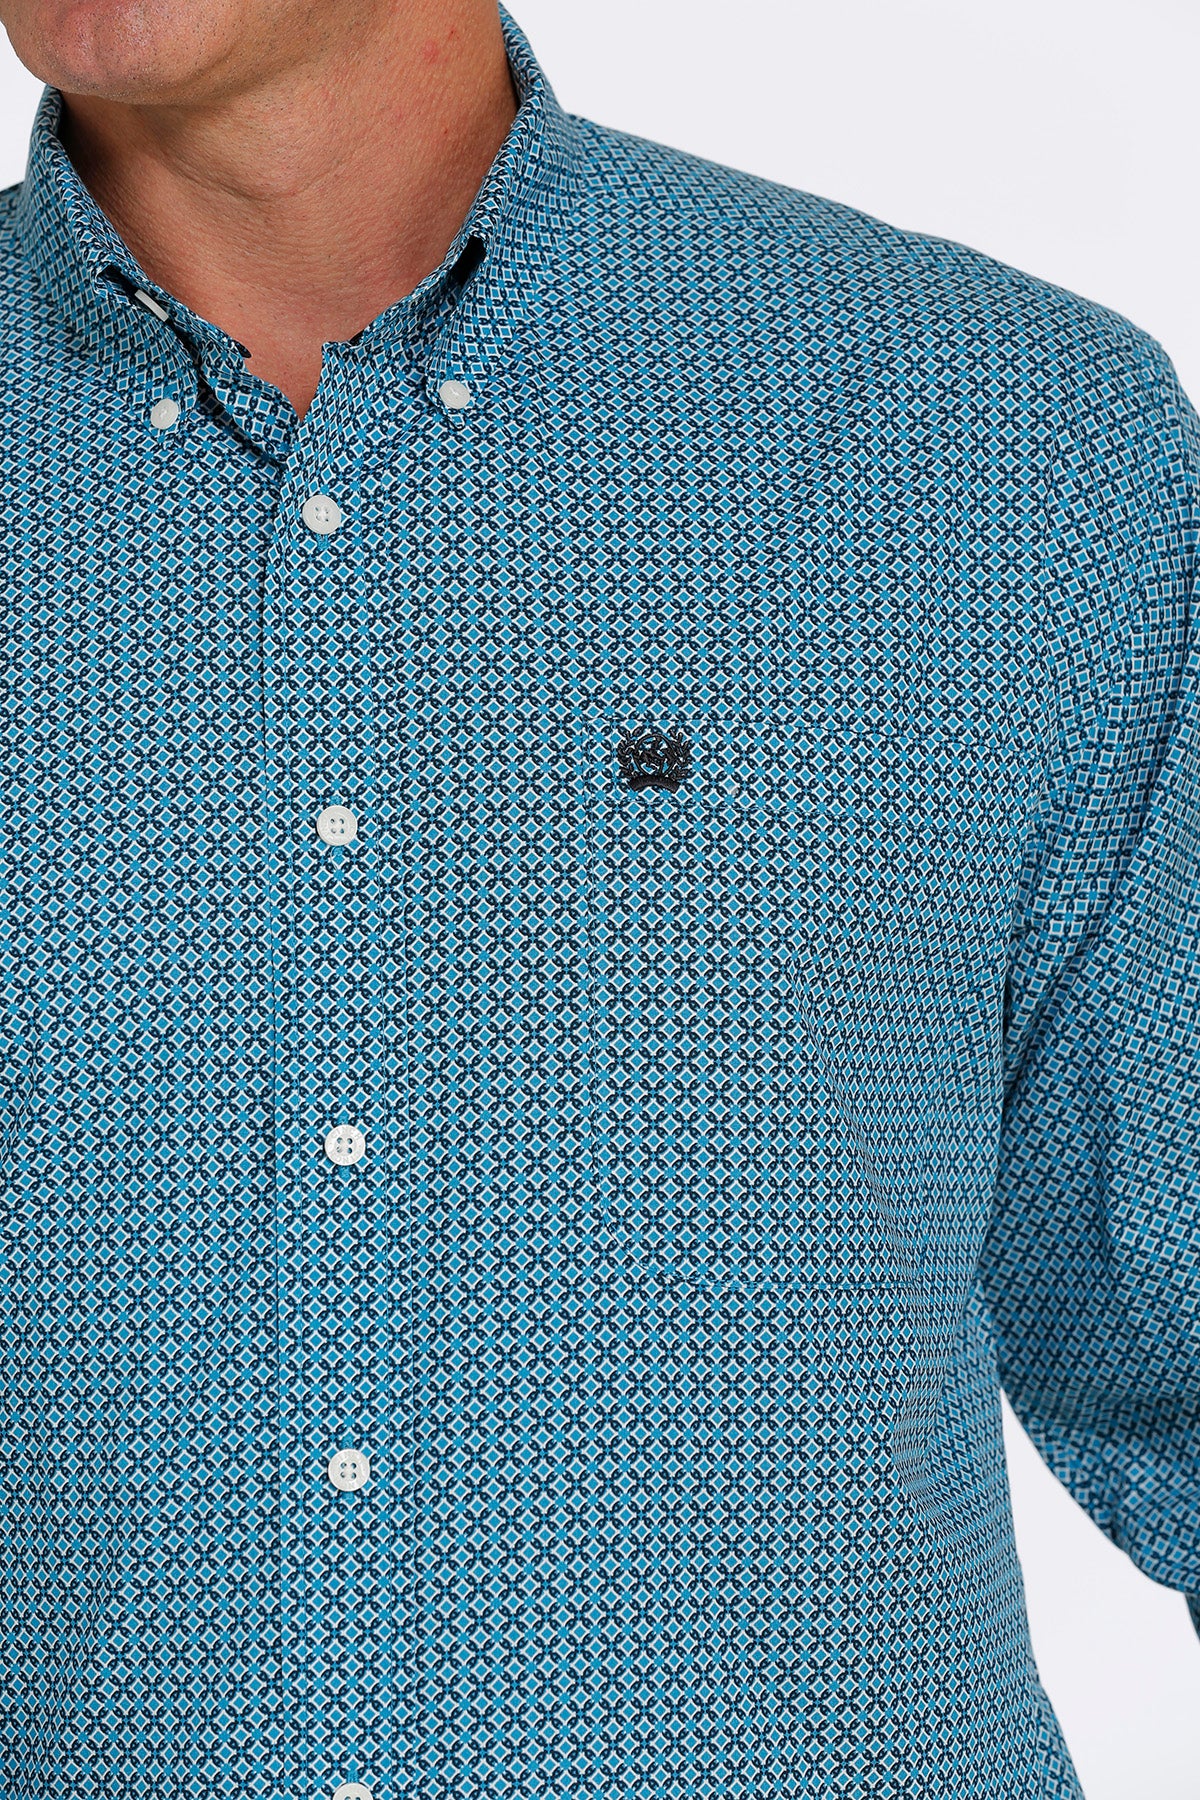 CINCH Men's Turquoise and Cream Diamond Print Button-Down Western Shirt